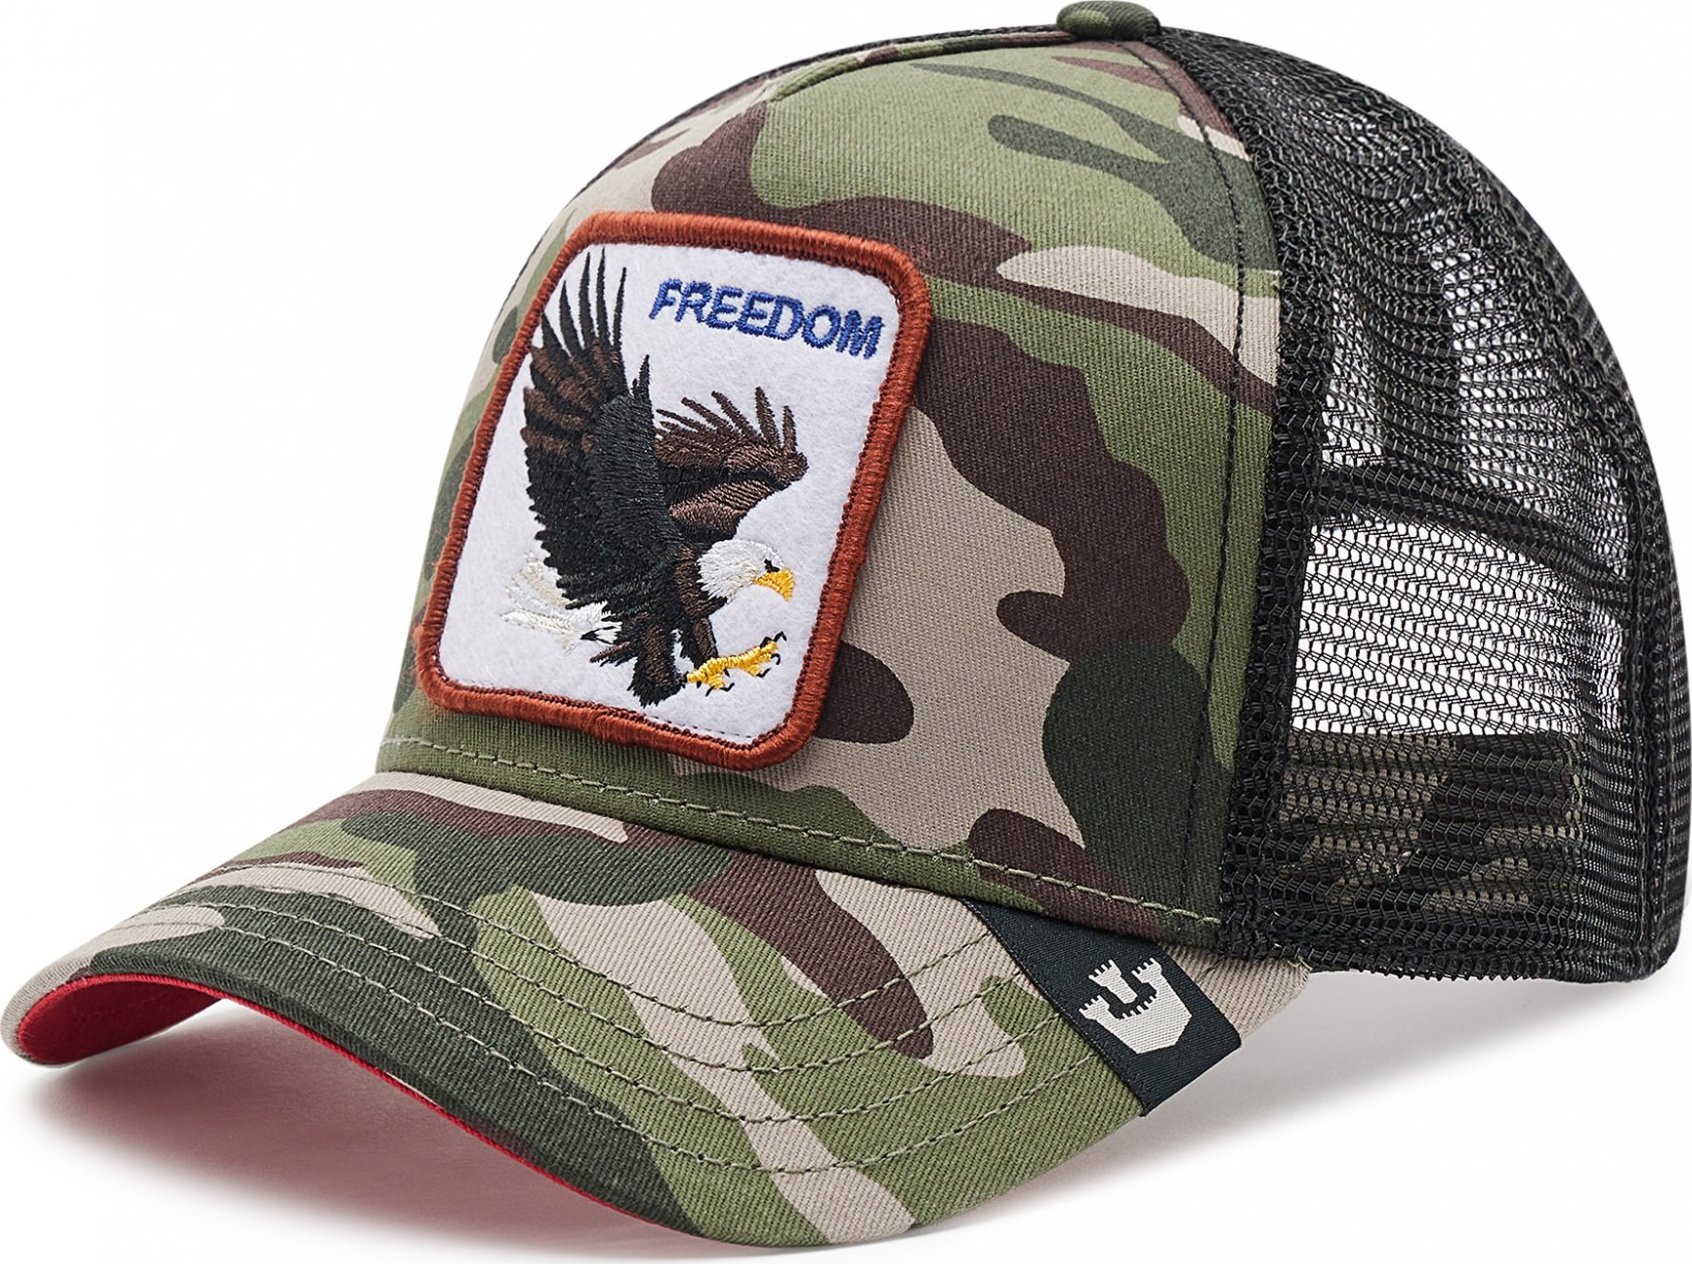 Goorin Bros The Freedom Eagle 101-0384